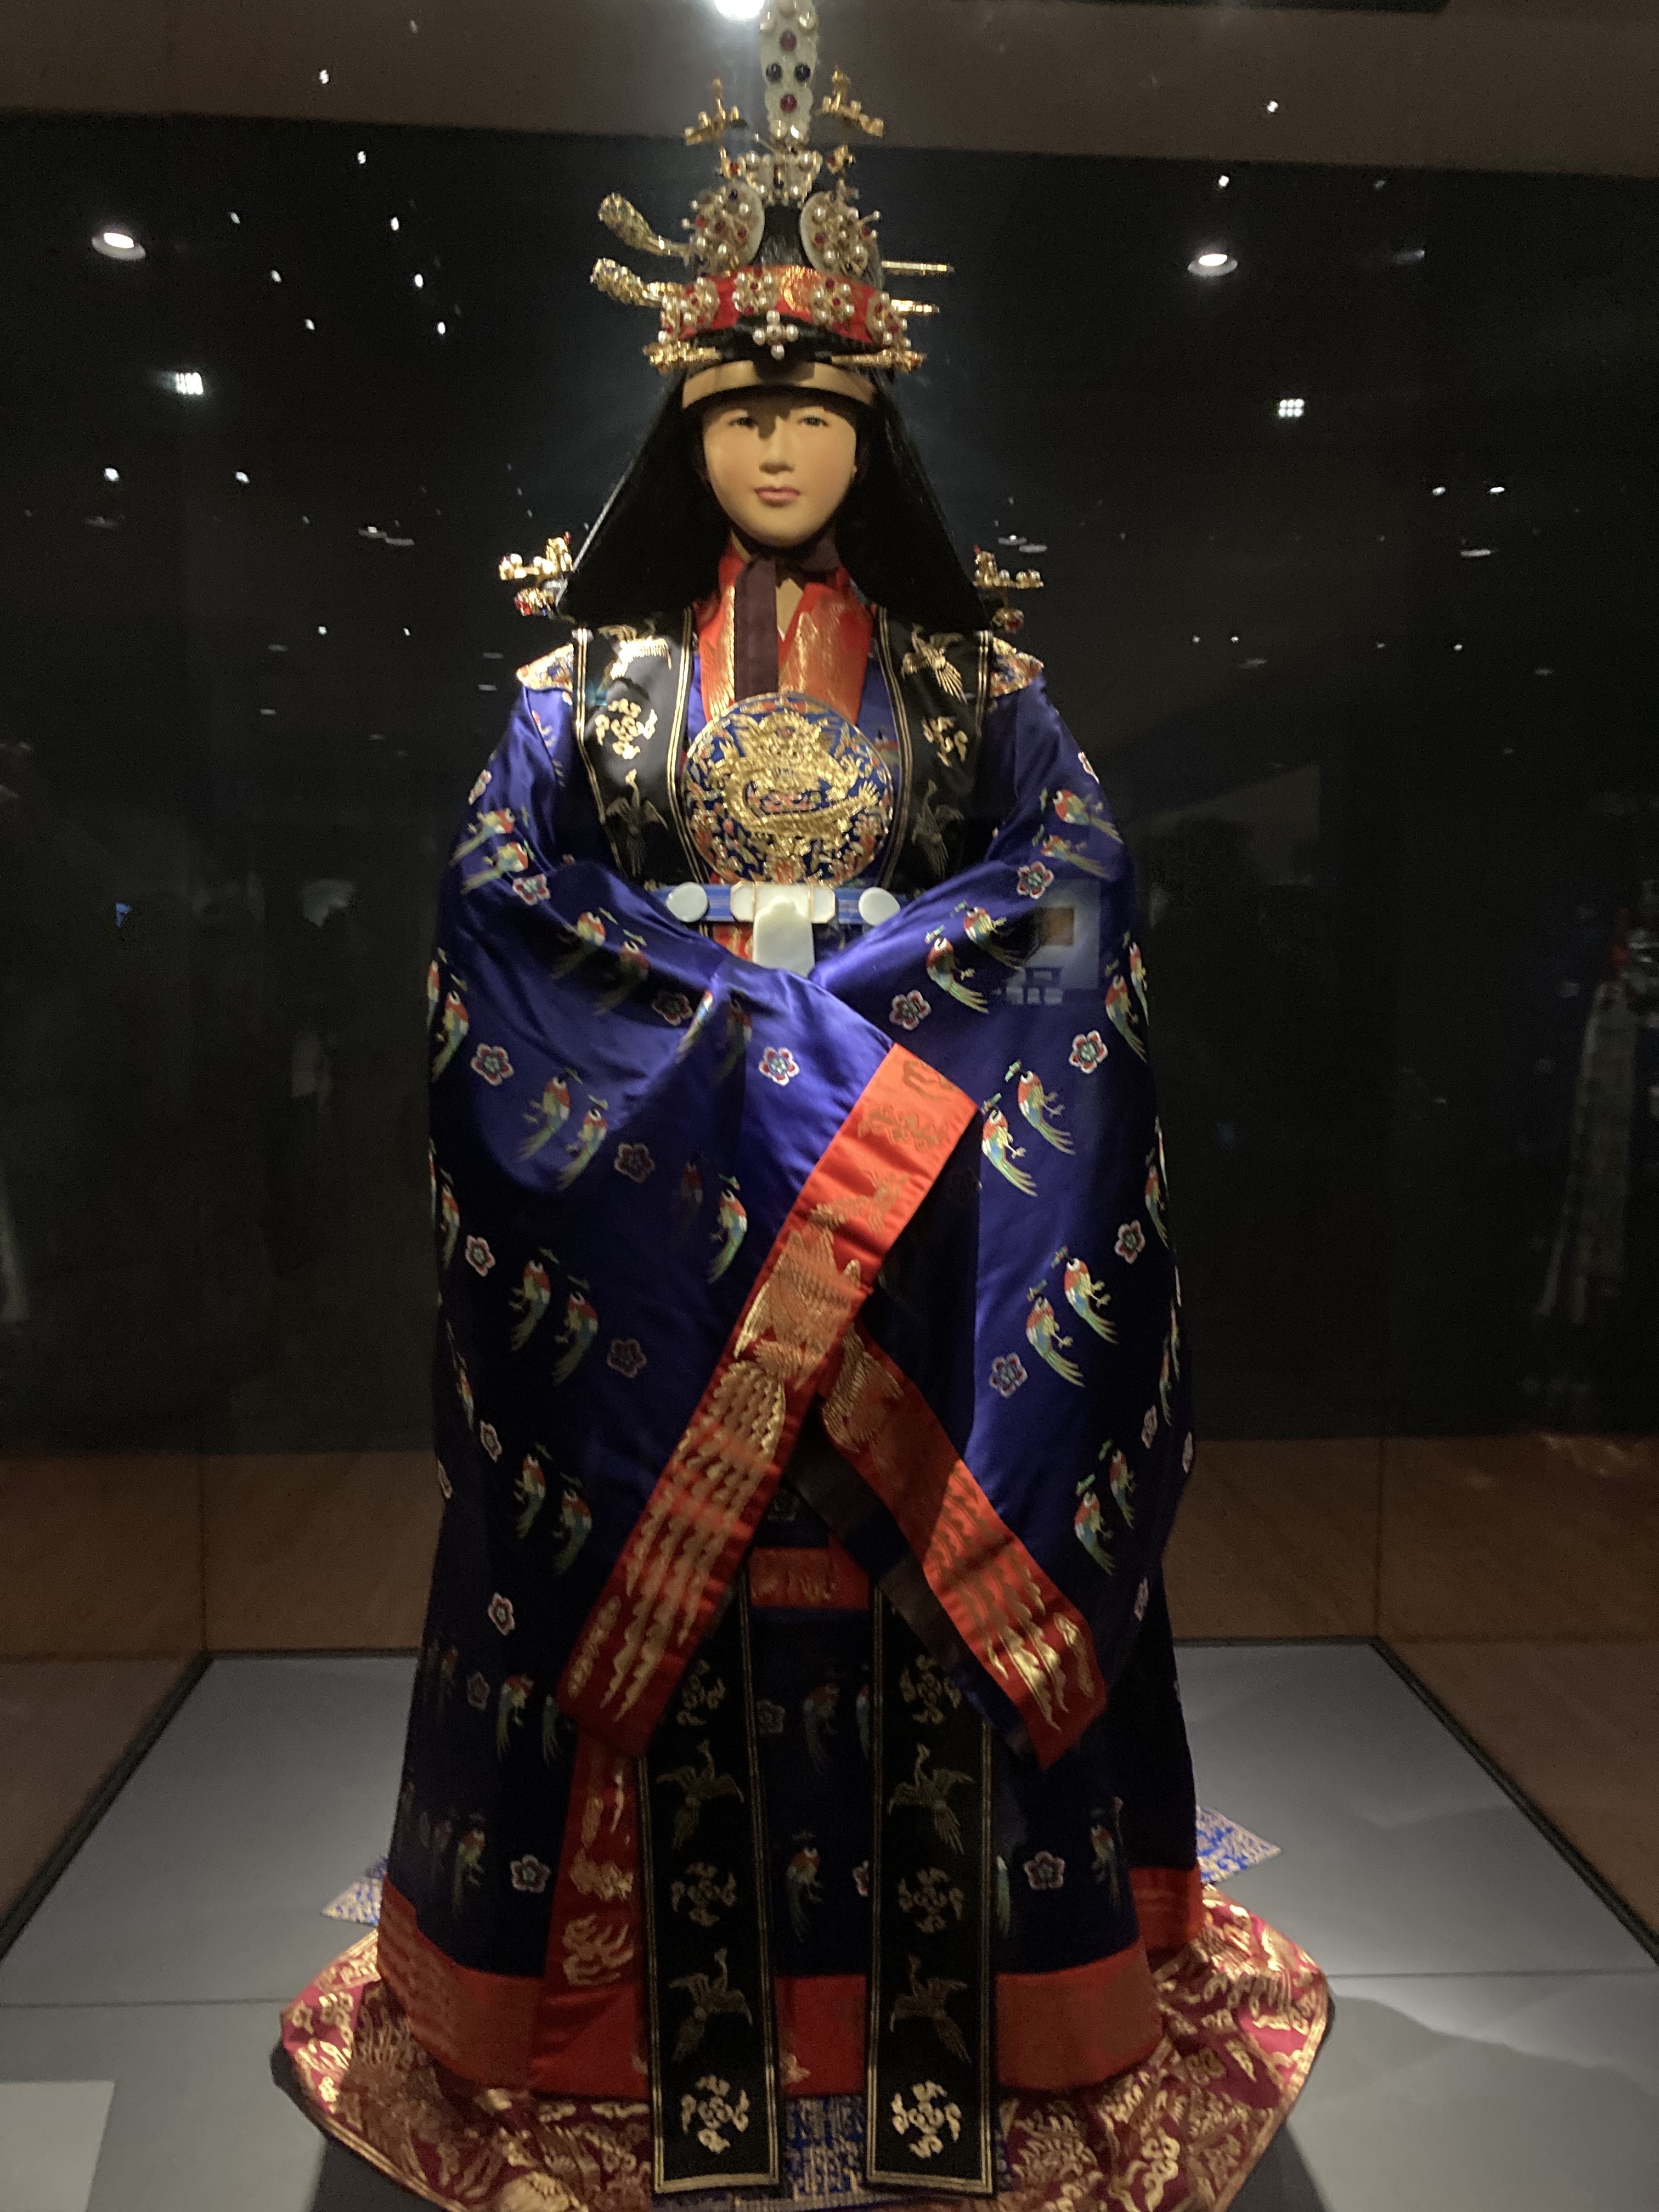 File:국립 고궁박물관 영친왕비 적의 01.Jpg - Wikimedia Commons